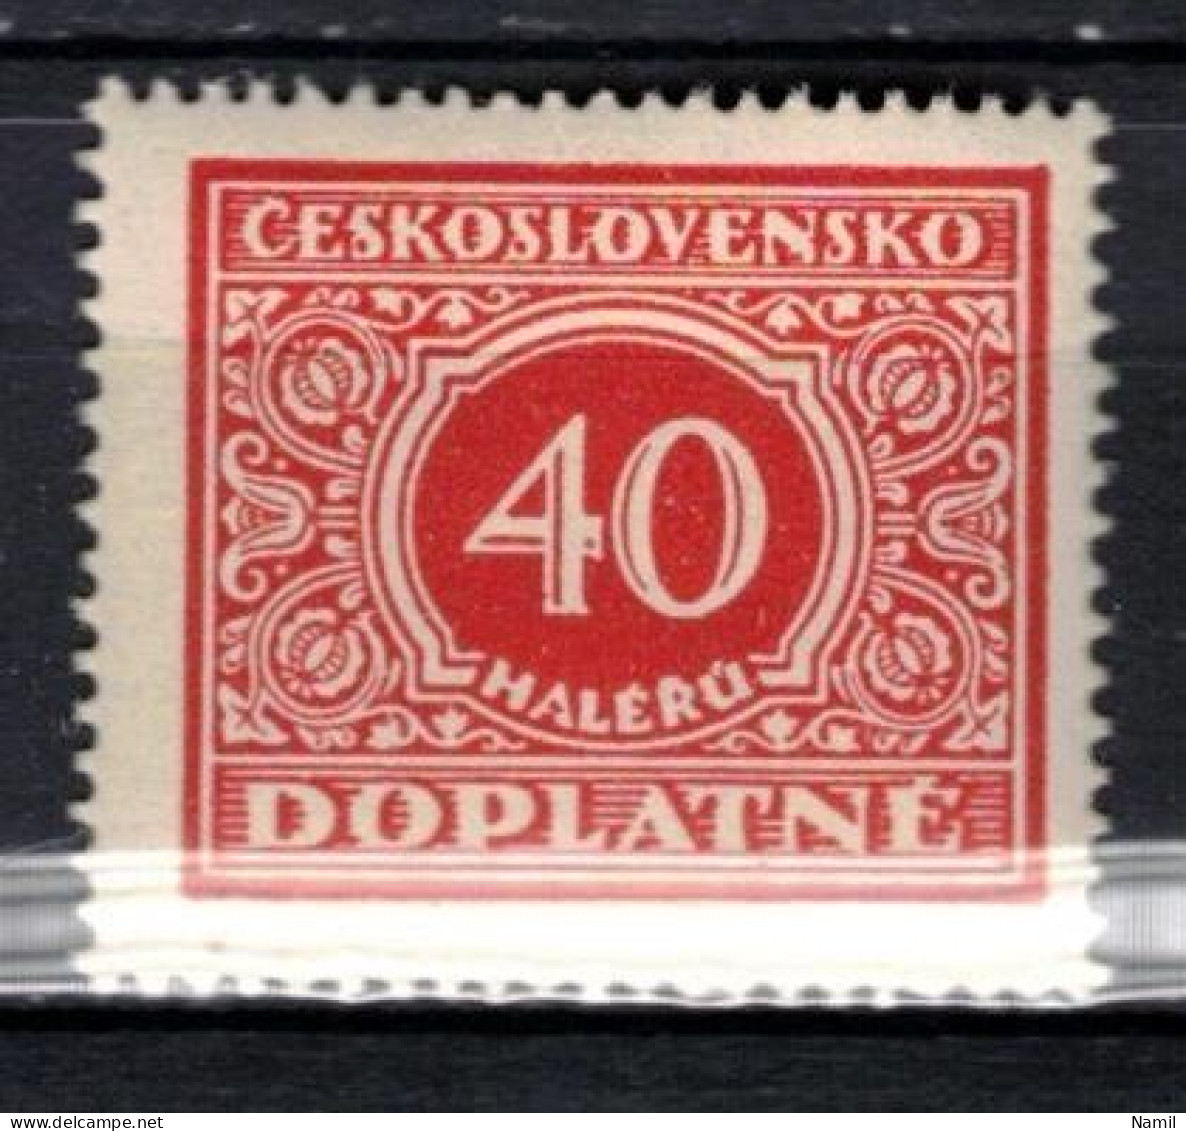 ** Tchécoslovaquie 1928 Mi P 59 (Yv TT 55), (MNH)** Varieté Position 69 - Errors, Freaks & Oddities (EFO)